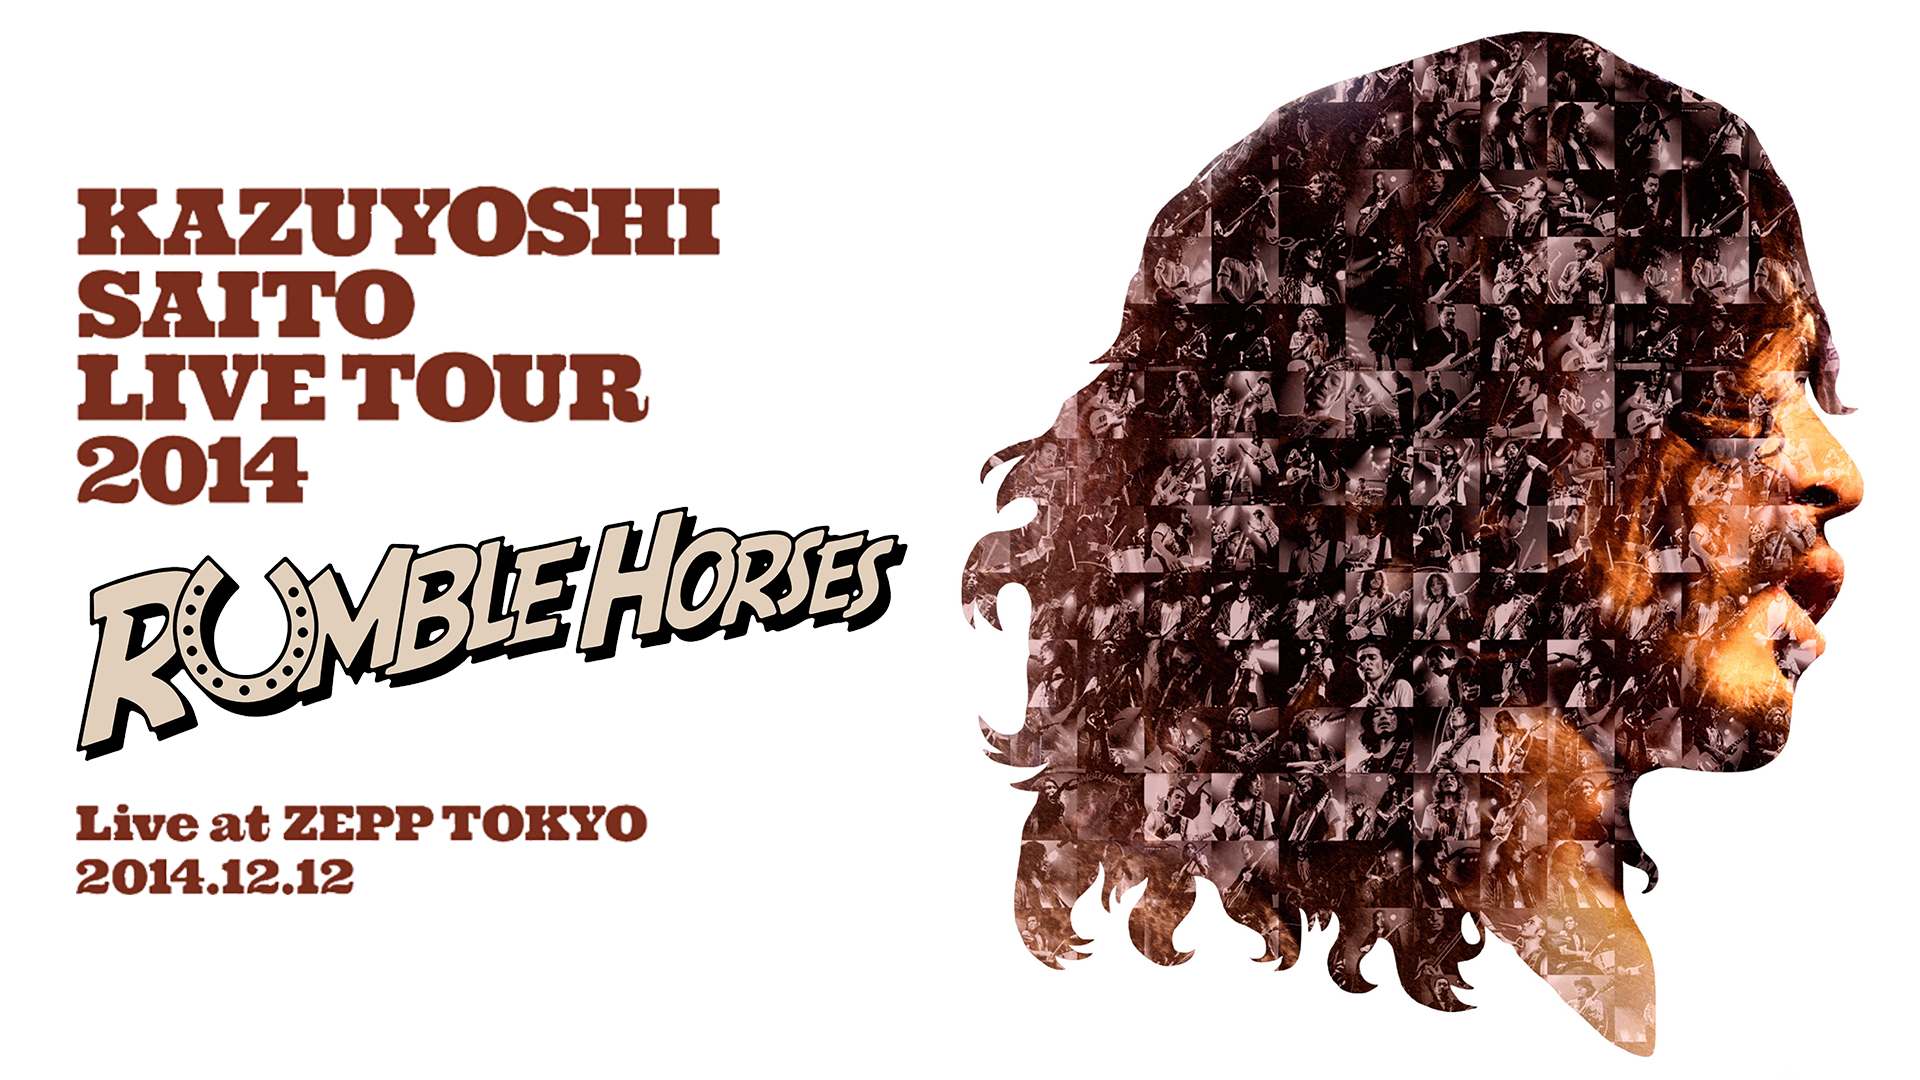 KAZUYOSHI SAITO LIVE TOUR 2014 “RUMBLE HORSES” Live at ZEPP TOKYO  2014.12.12(音楽・アイドル / 2015) - 動画配信 | U-NEXT 31日間無料トライアル